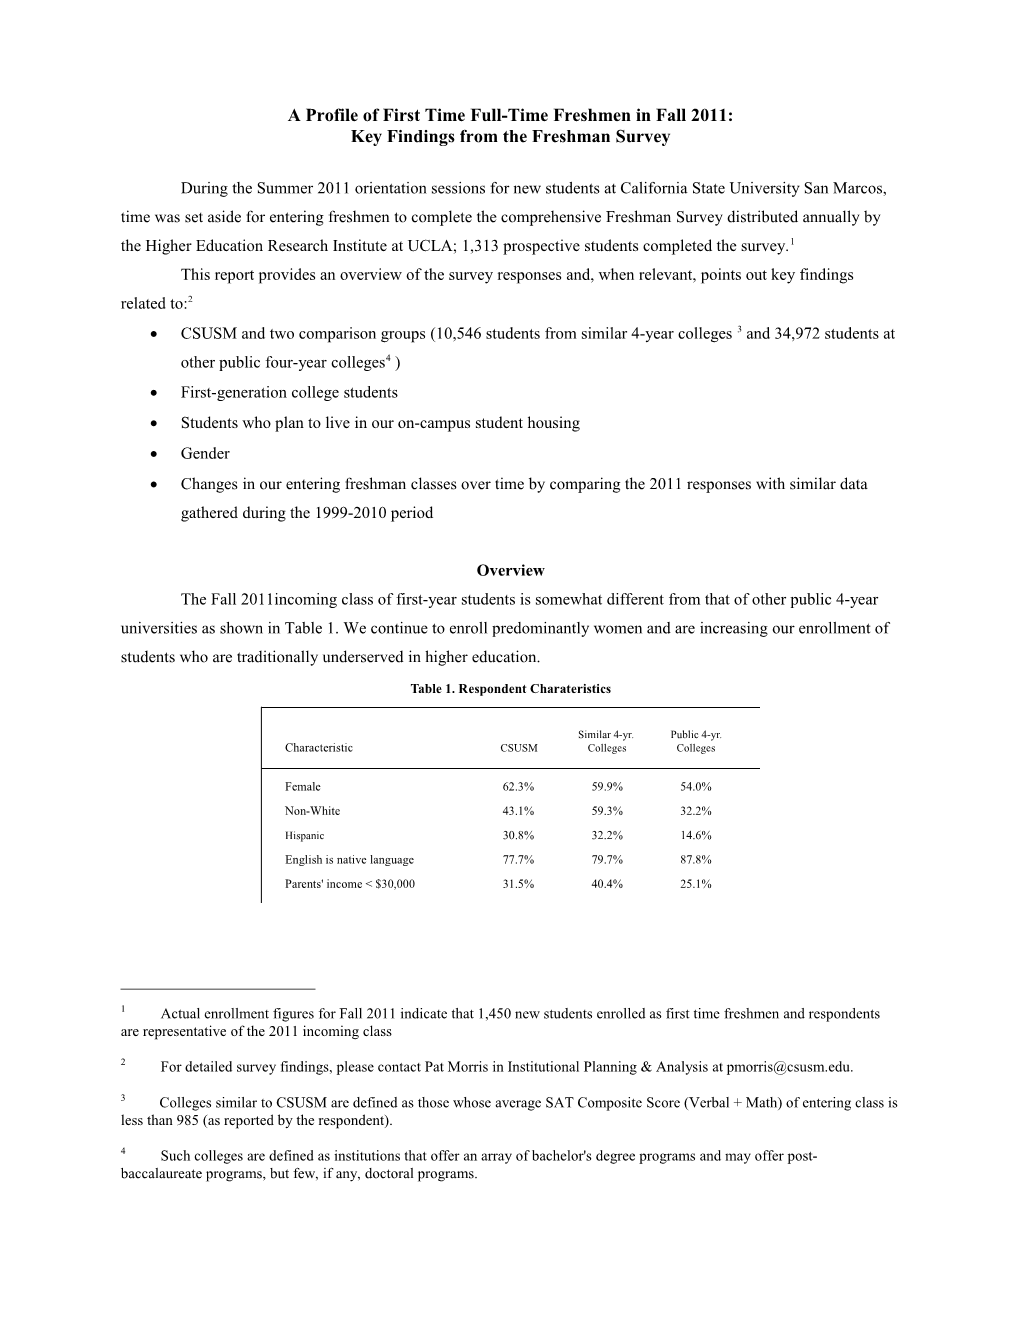 Fall 2006 CIRP Freshman Survey- Overview